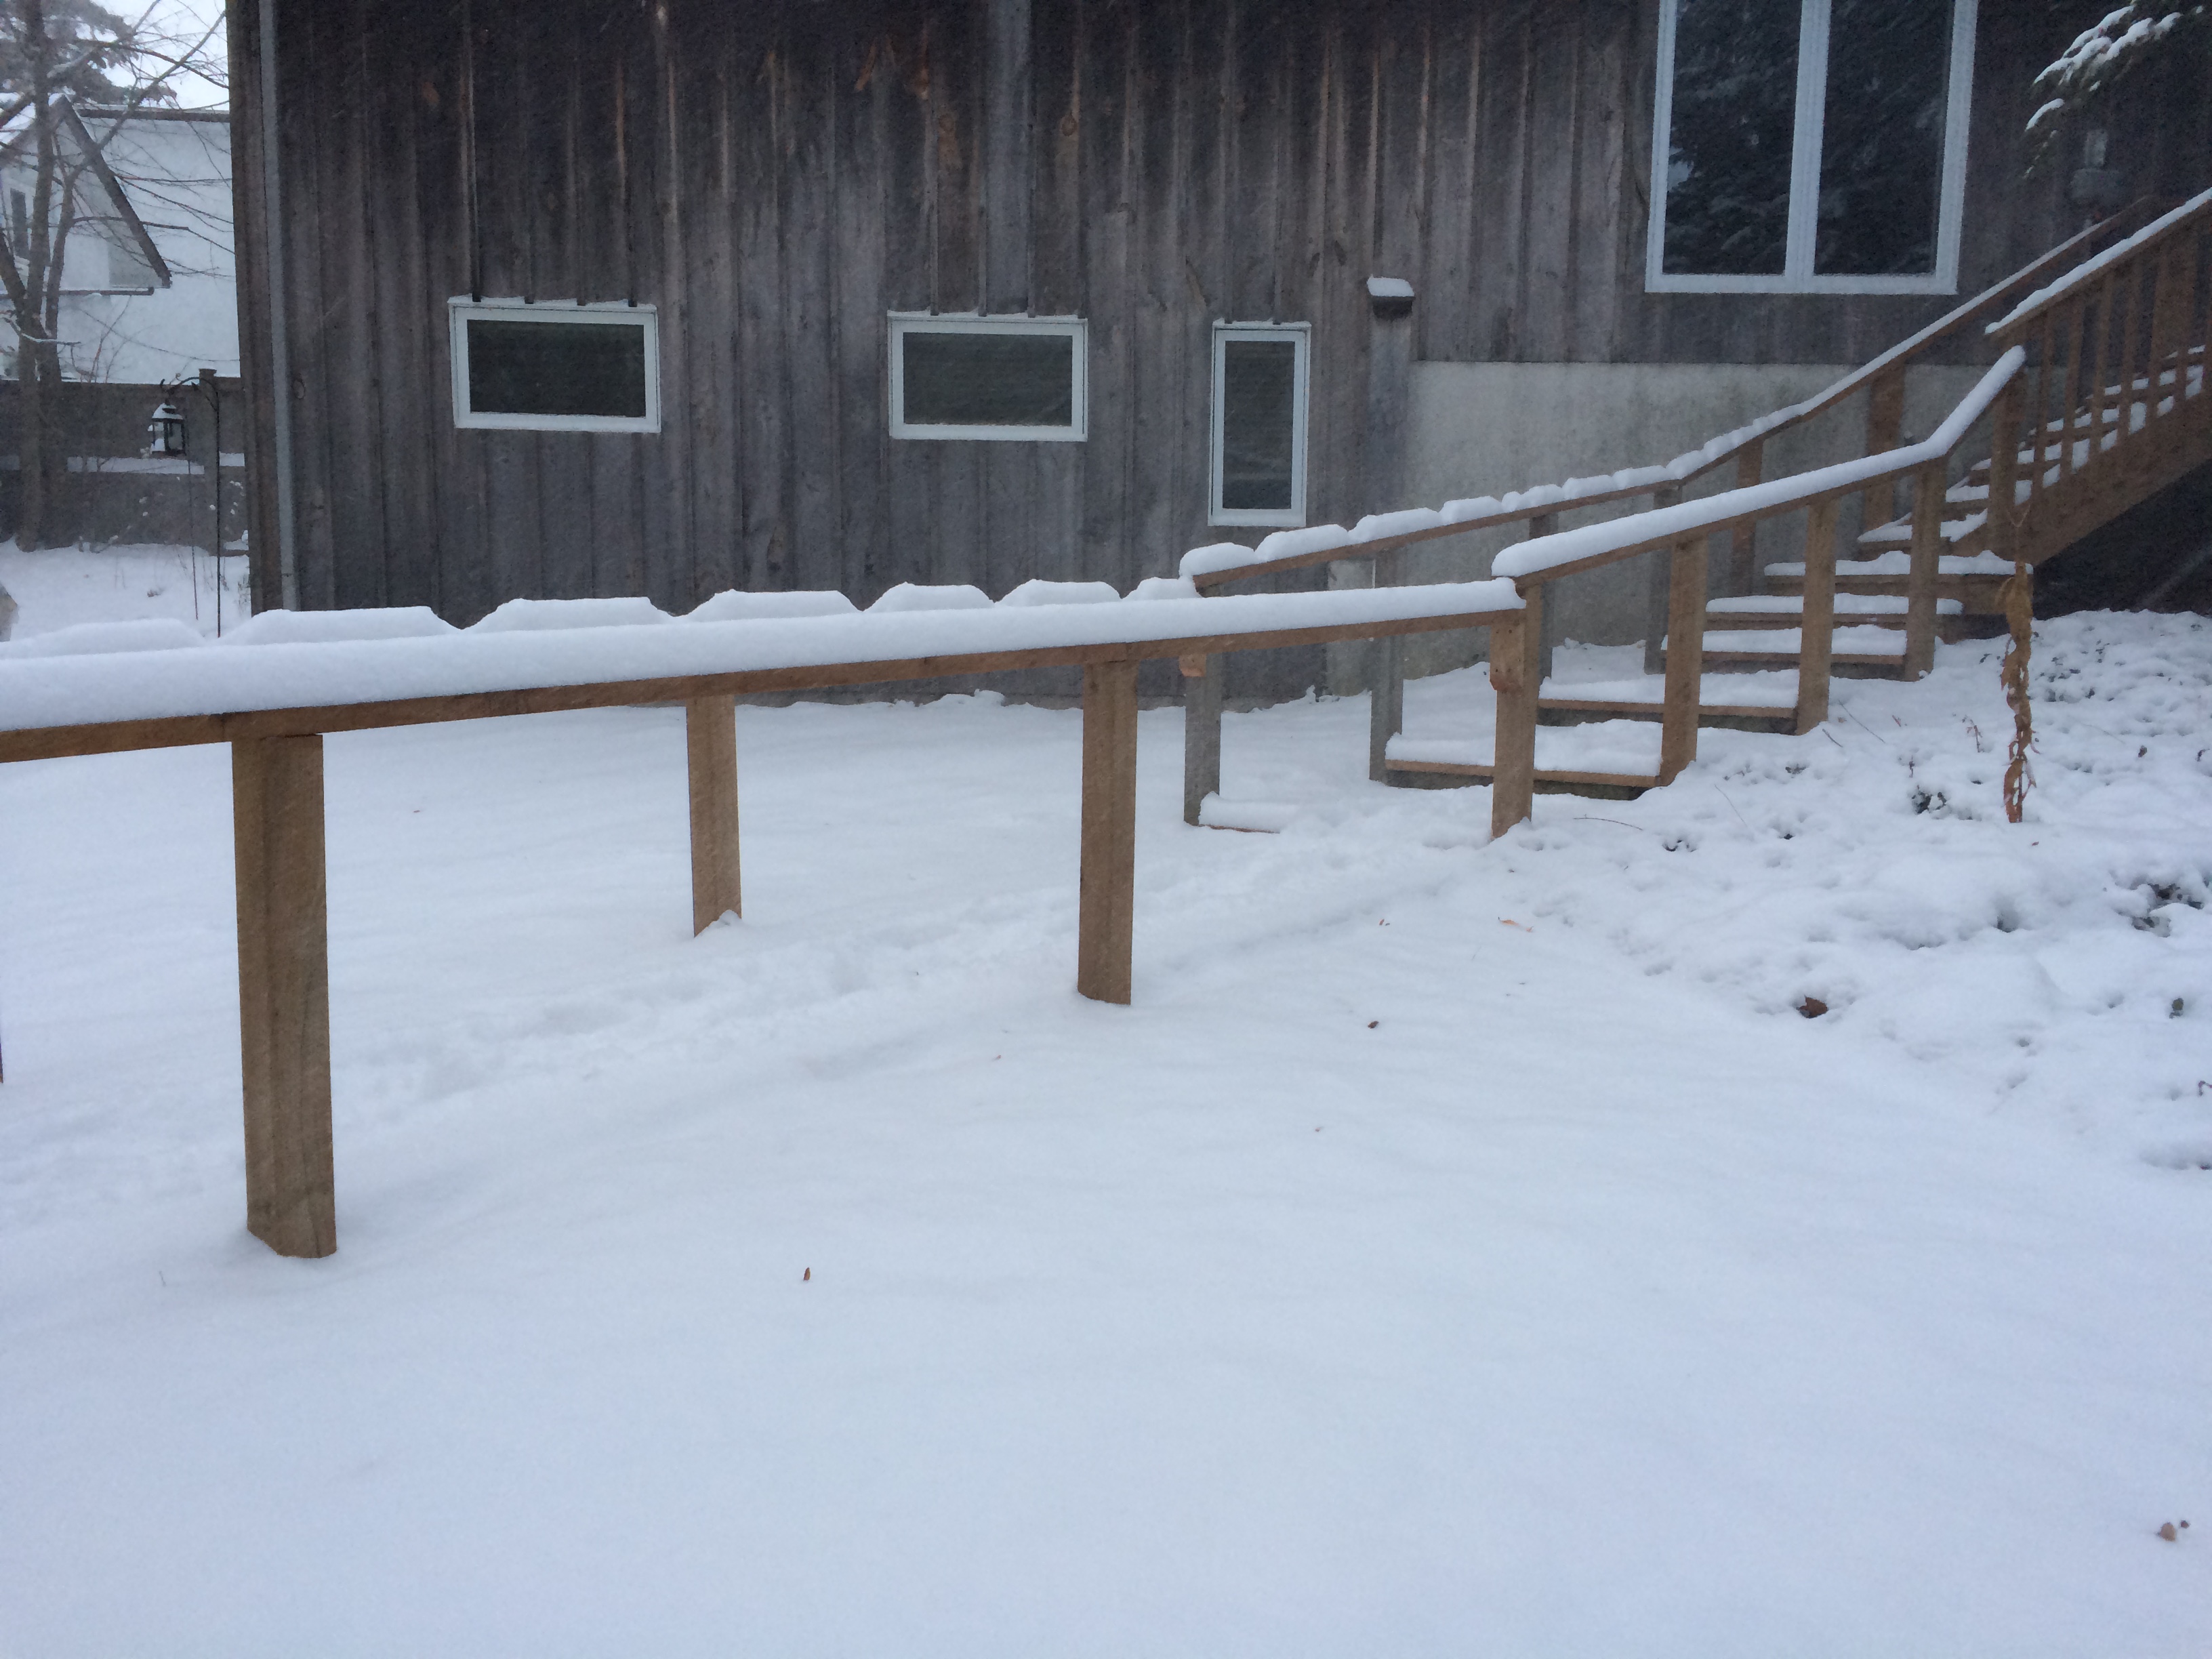 Snowy handrail